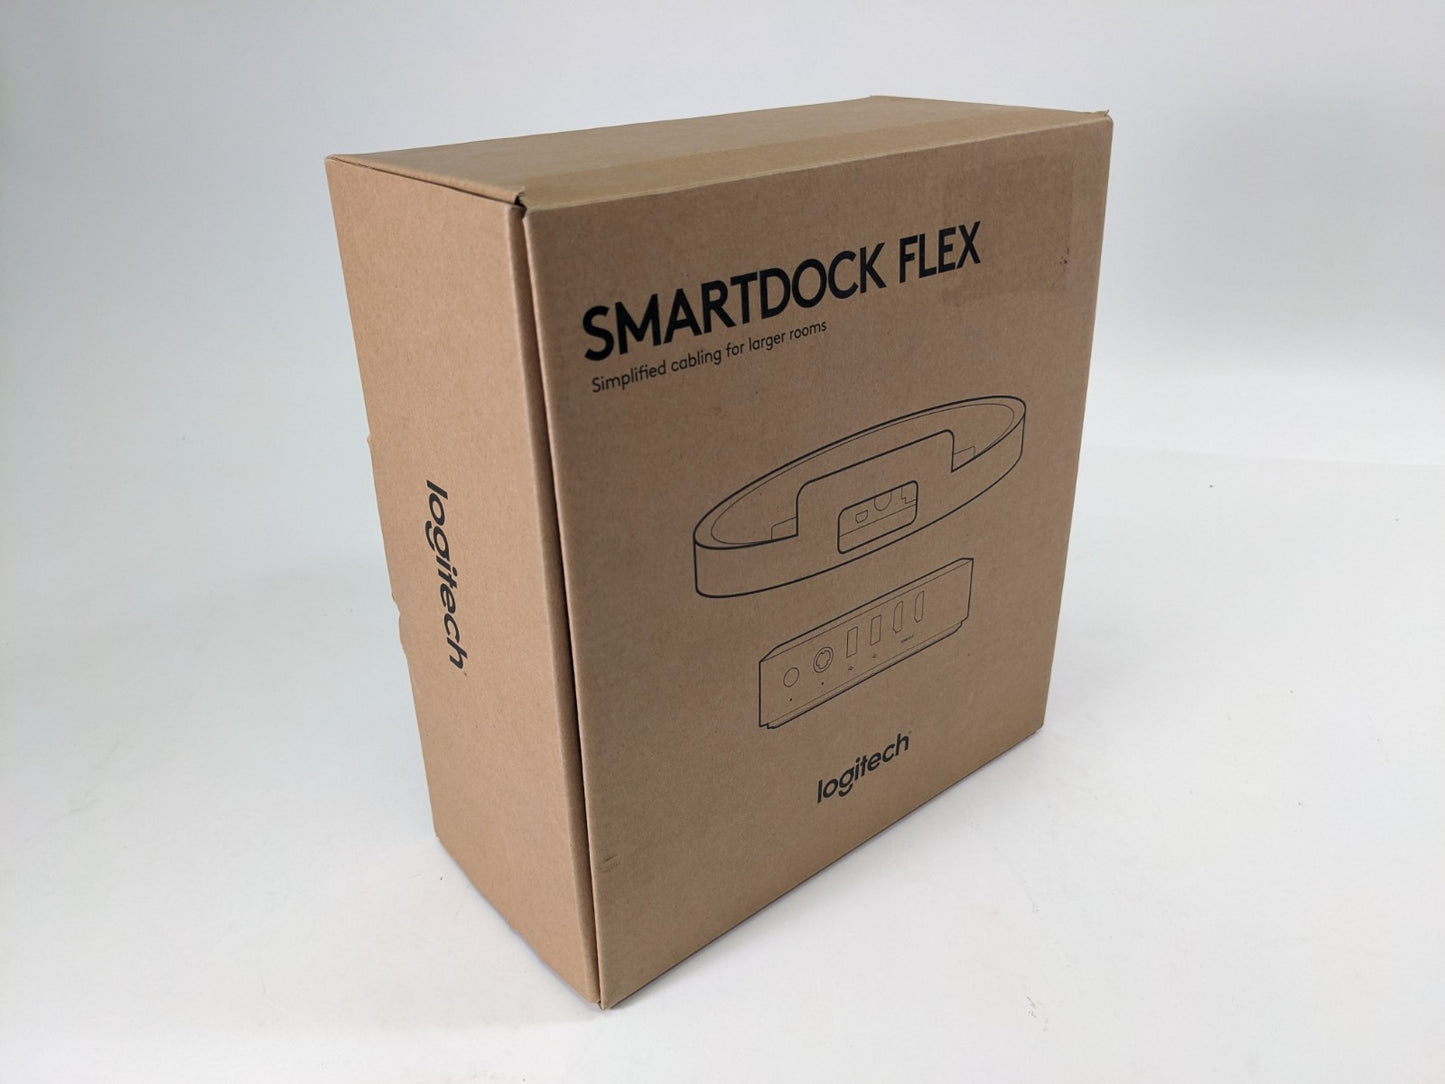 Logitech SmartDock Flex - 960-001213 549.99